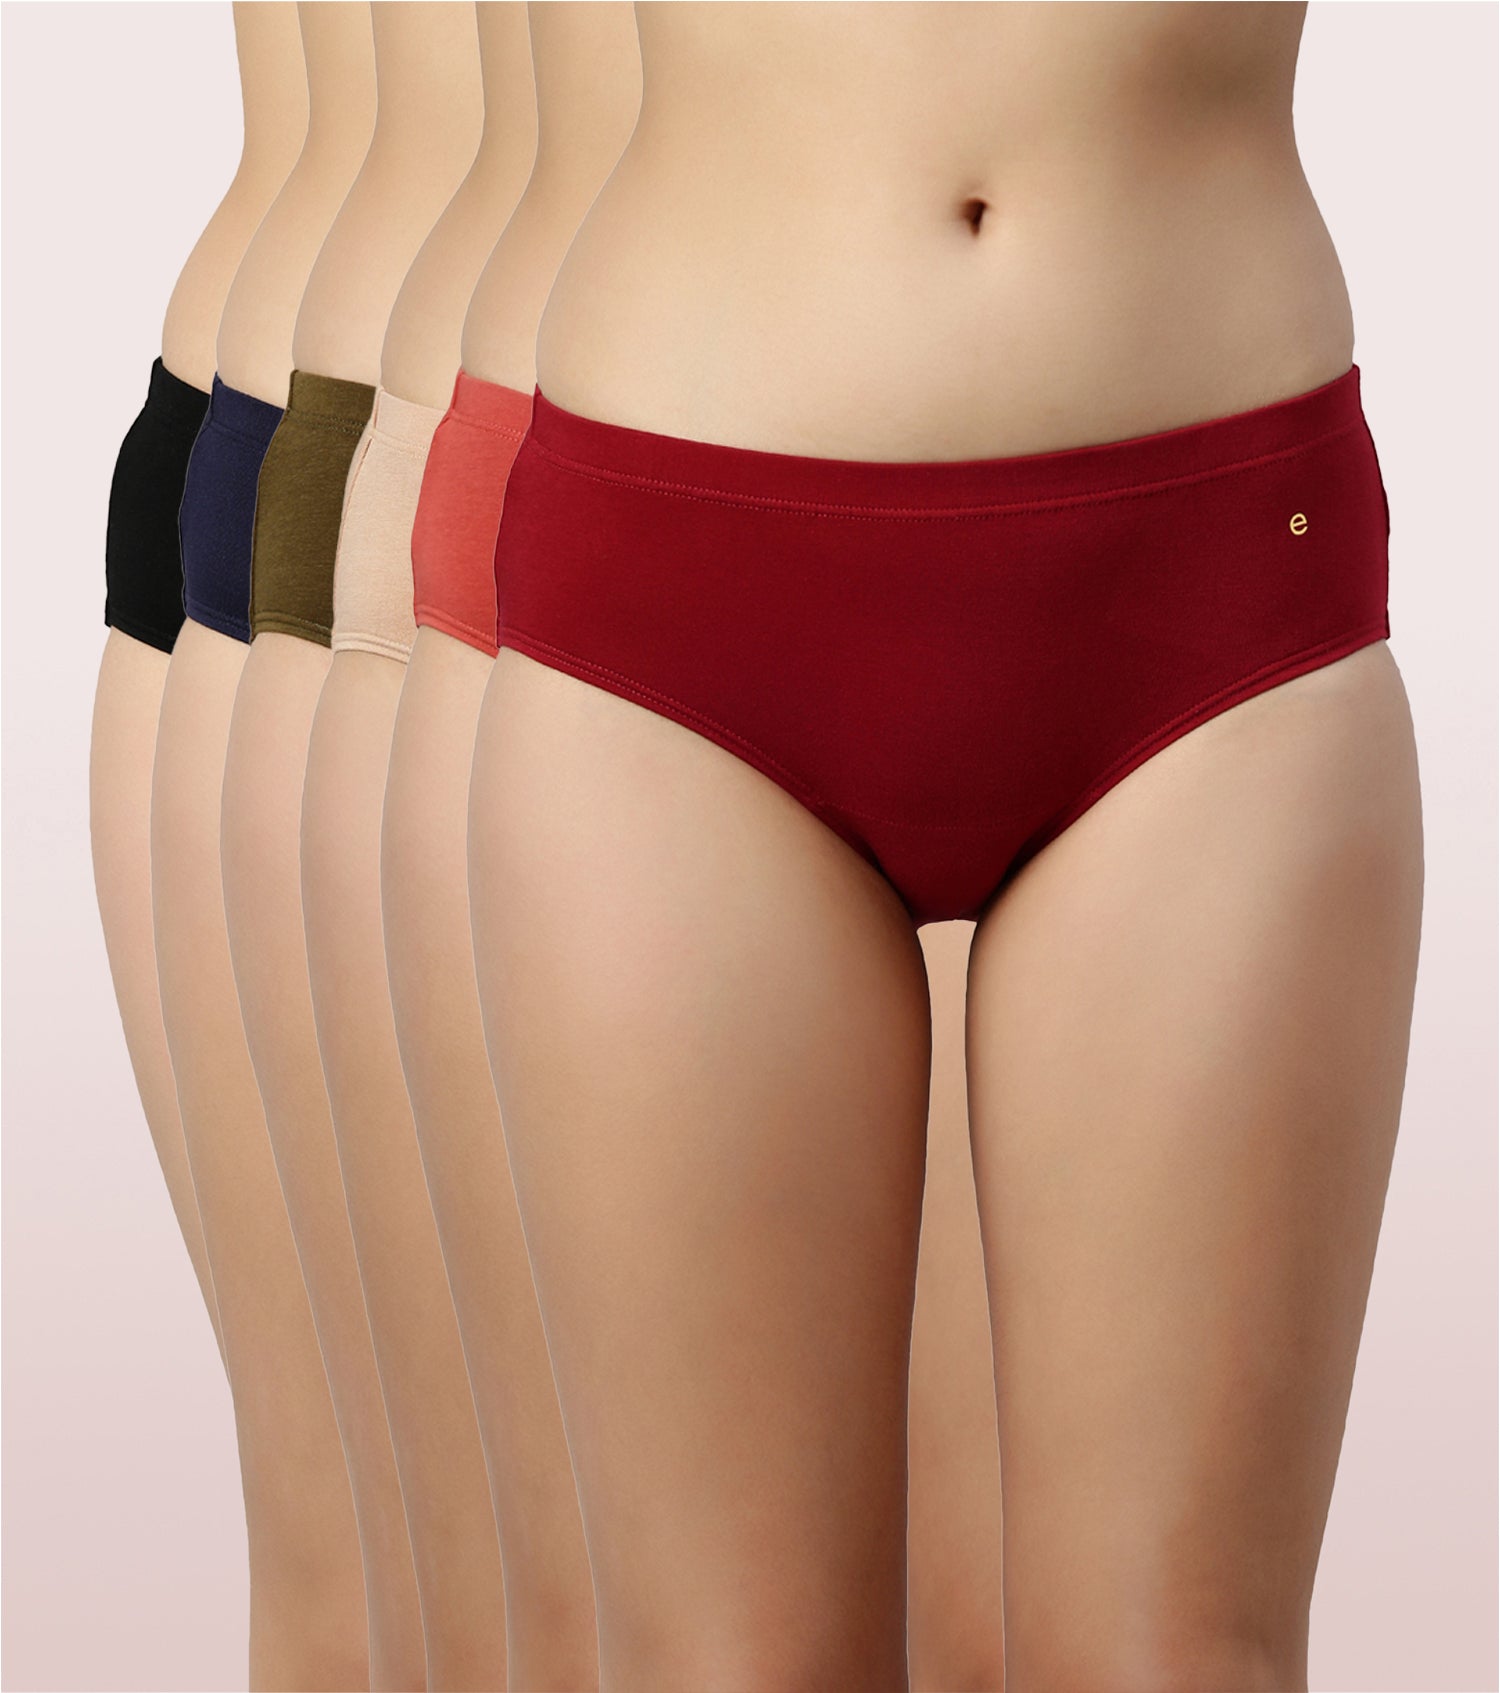 Panache Women's Idina Brief Panty, Latte, (10) Small (6962) at   Women's Clothing store: Briefs Underwear